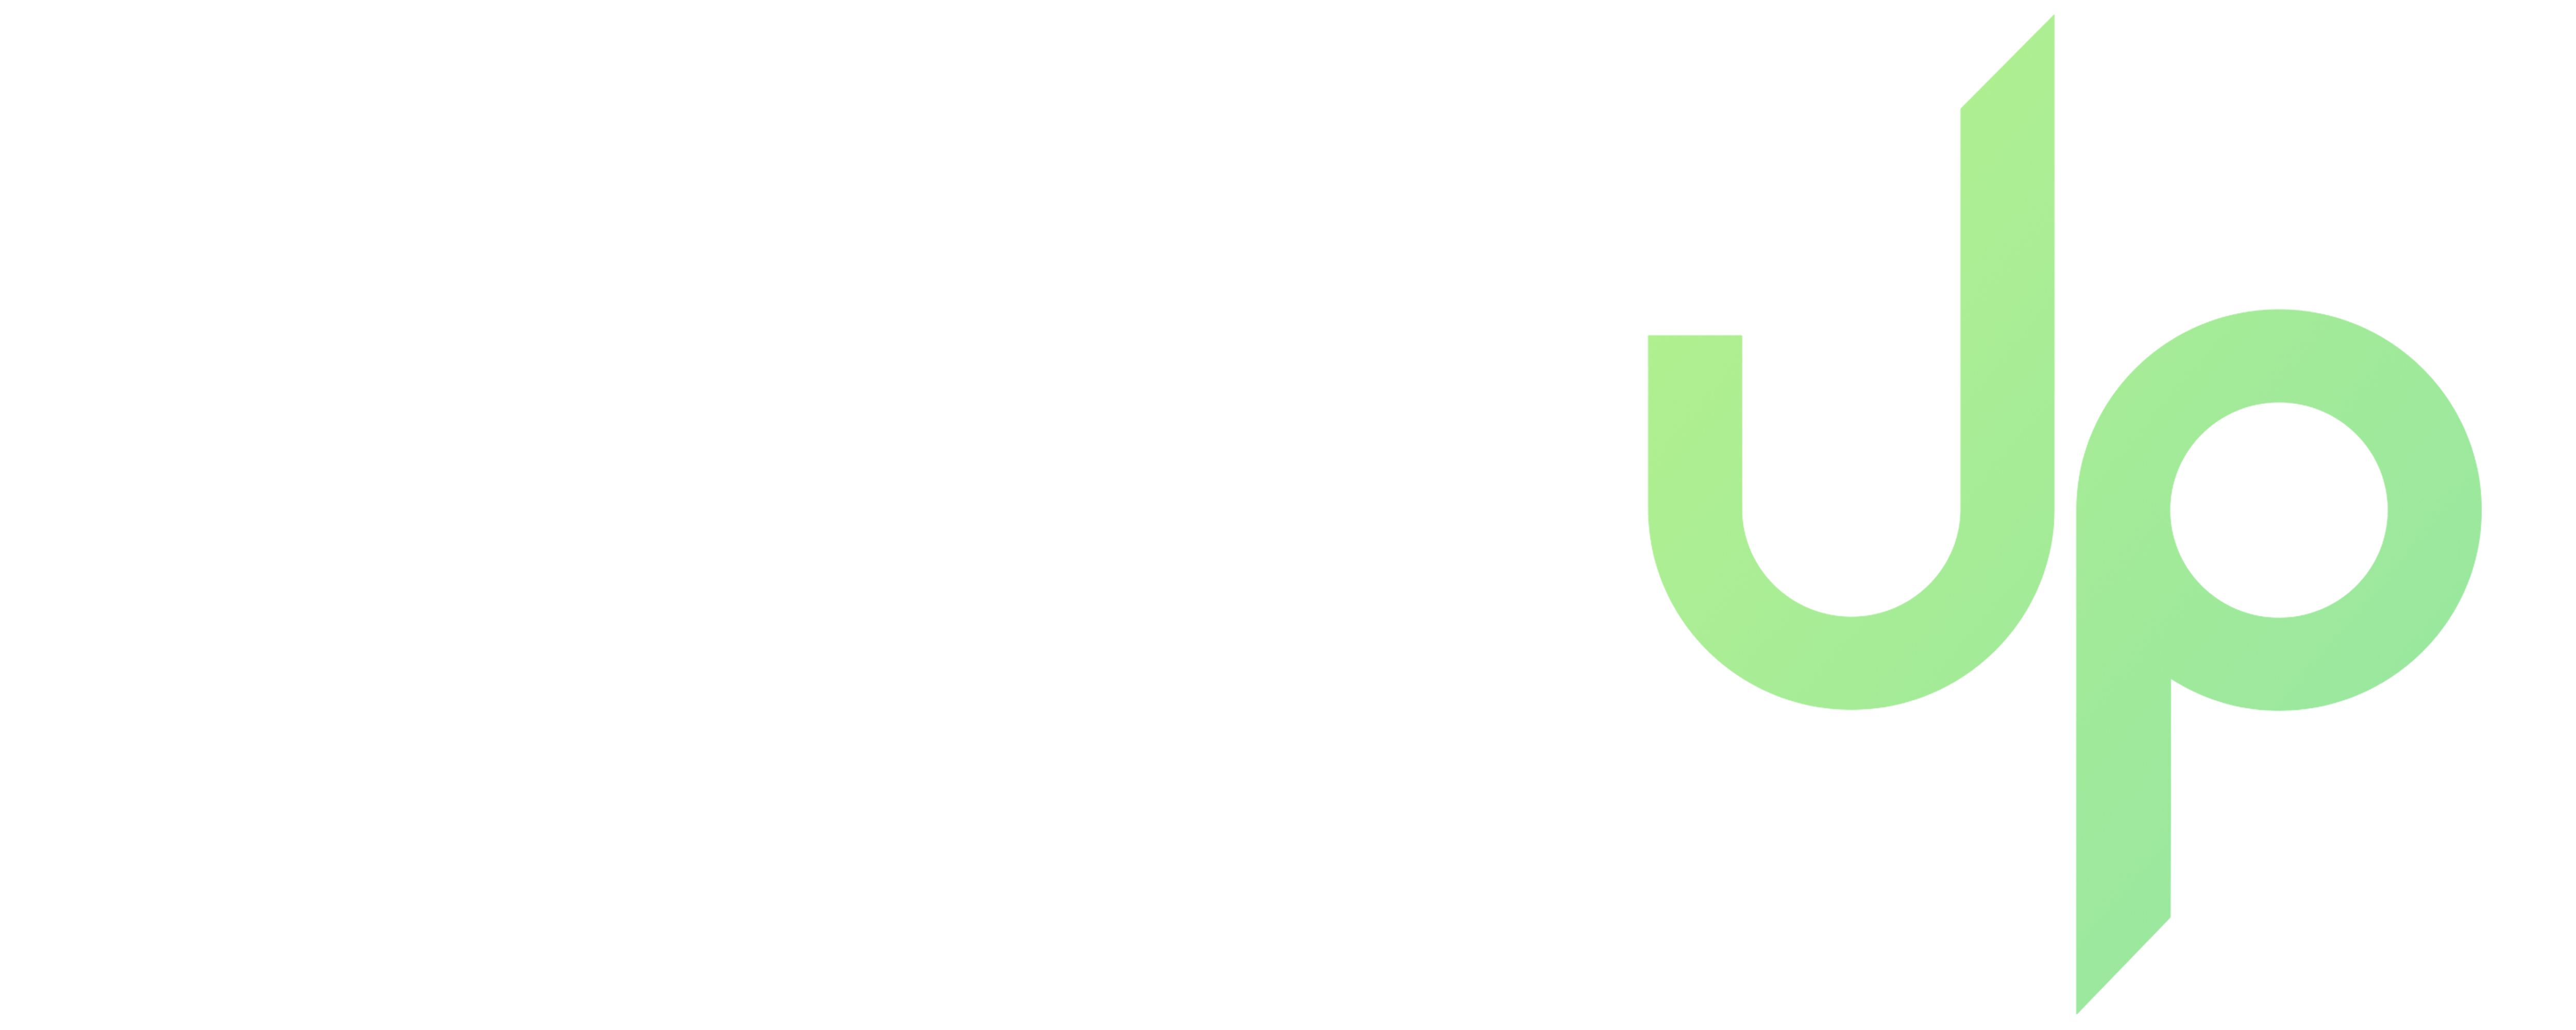 MediUp – Video Editing & Web Design